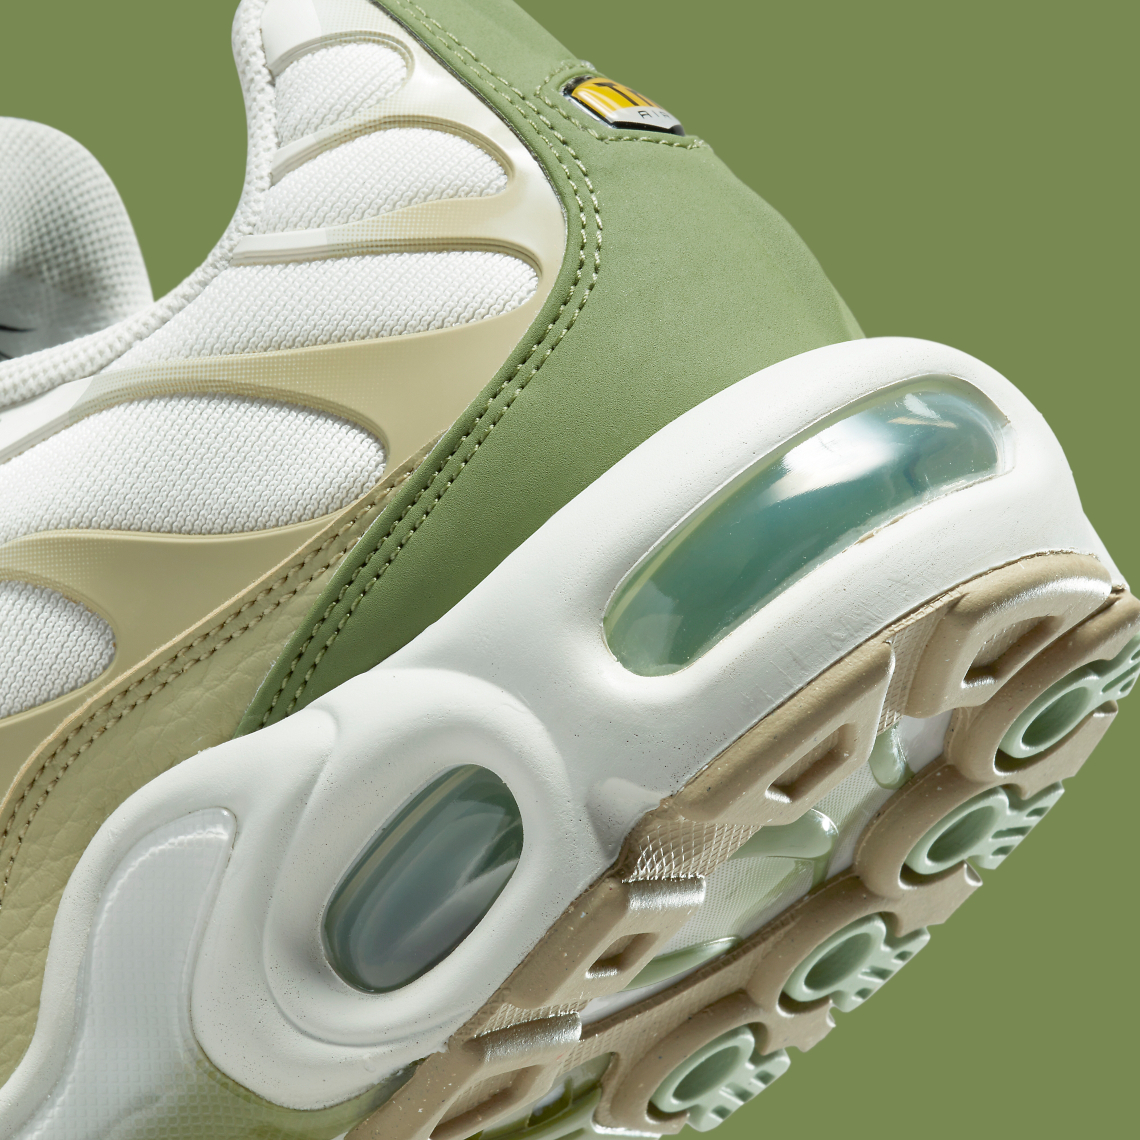 Nike Air Max green and white air max Plus "White/Green" DX8954-001 | SneakerNews.com